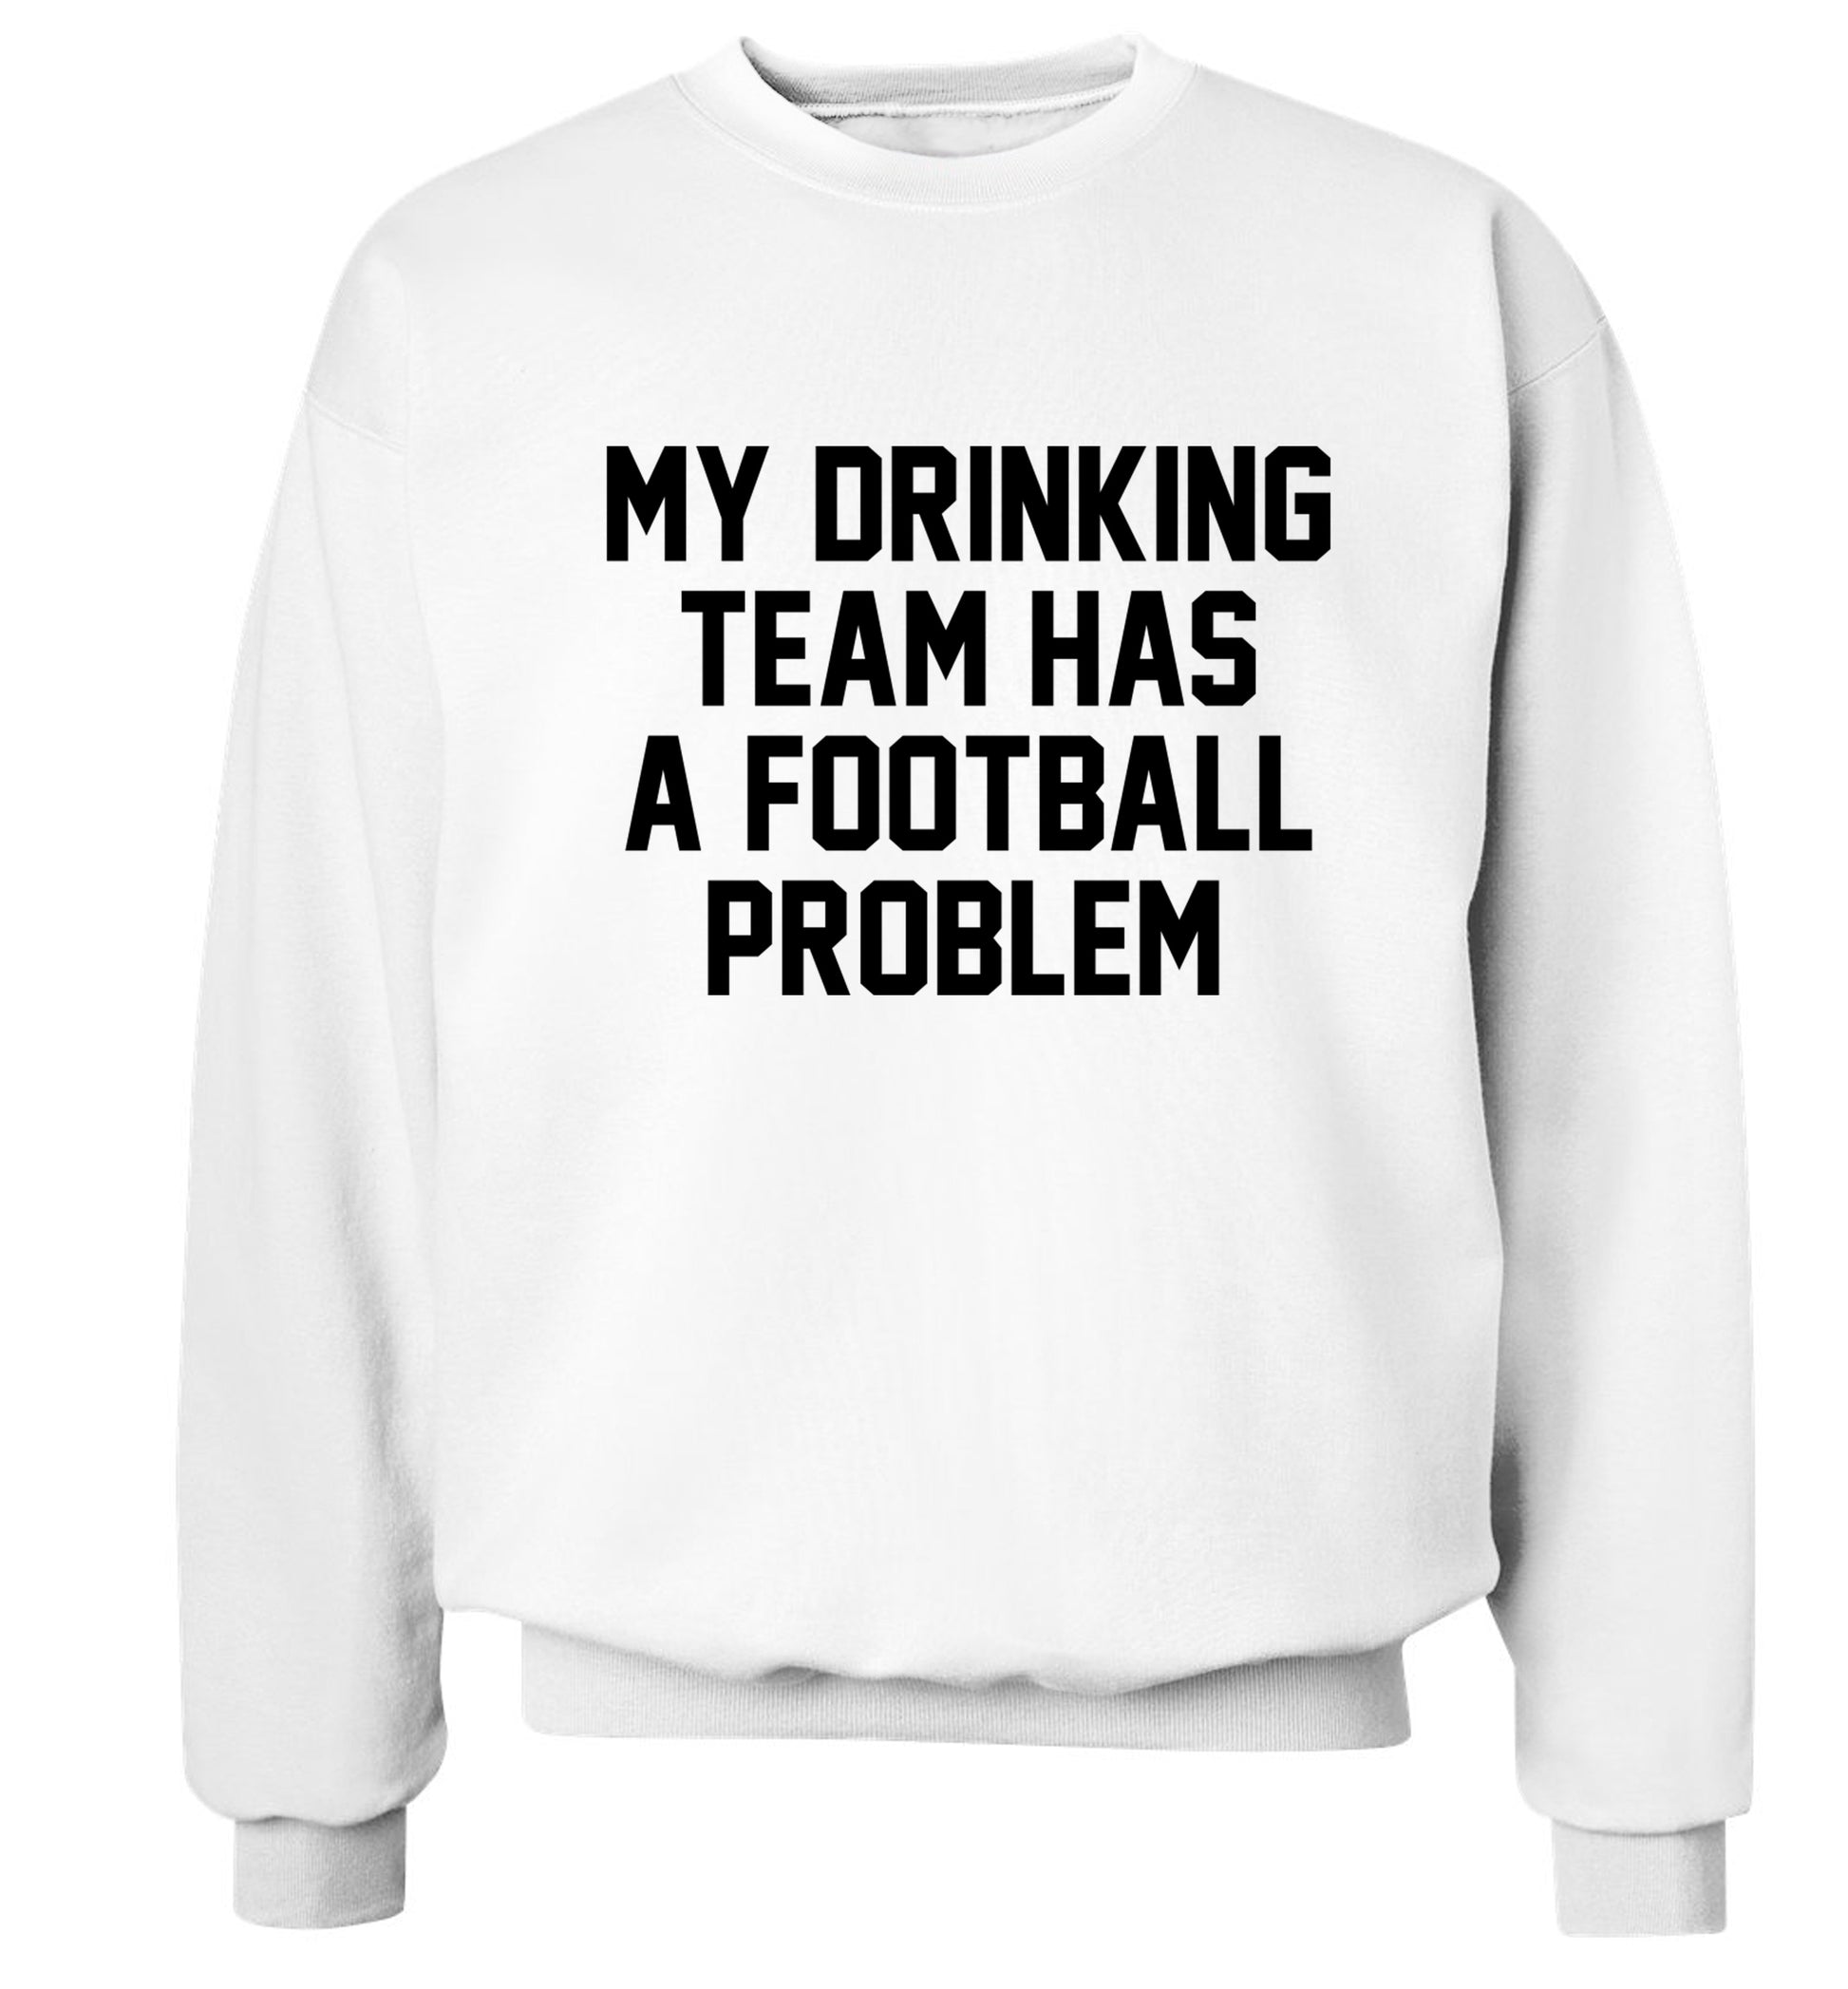 My drinking team has a football problem! Adult's unisexwhite Sweater 2XL